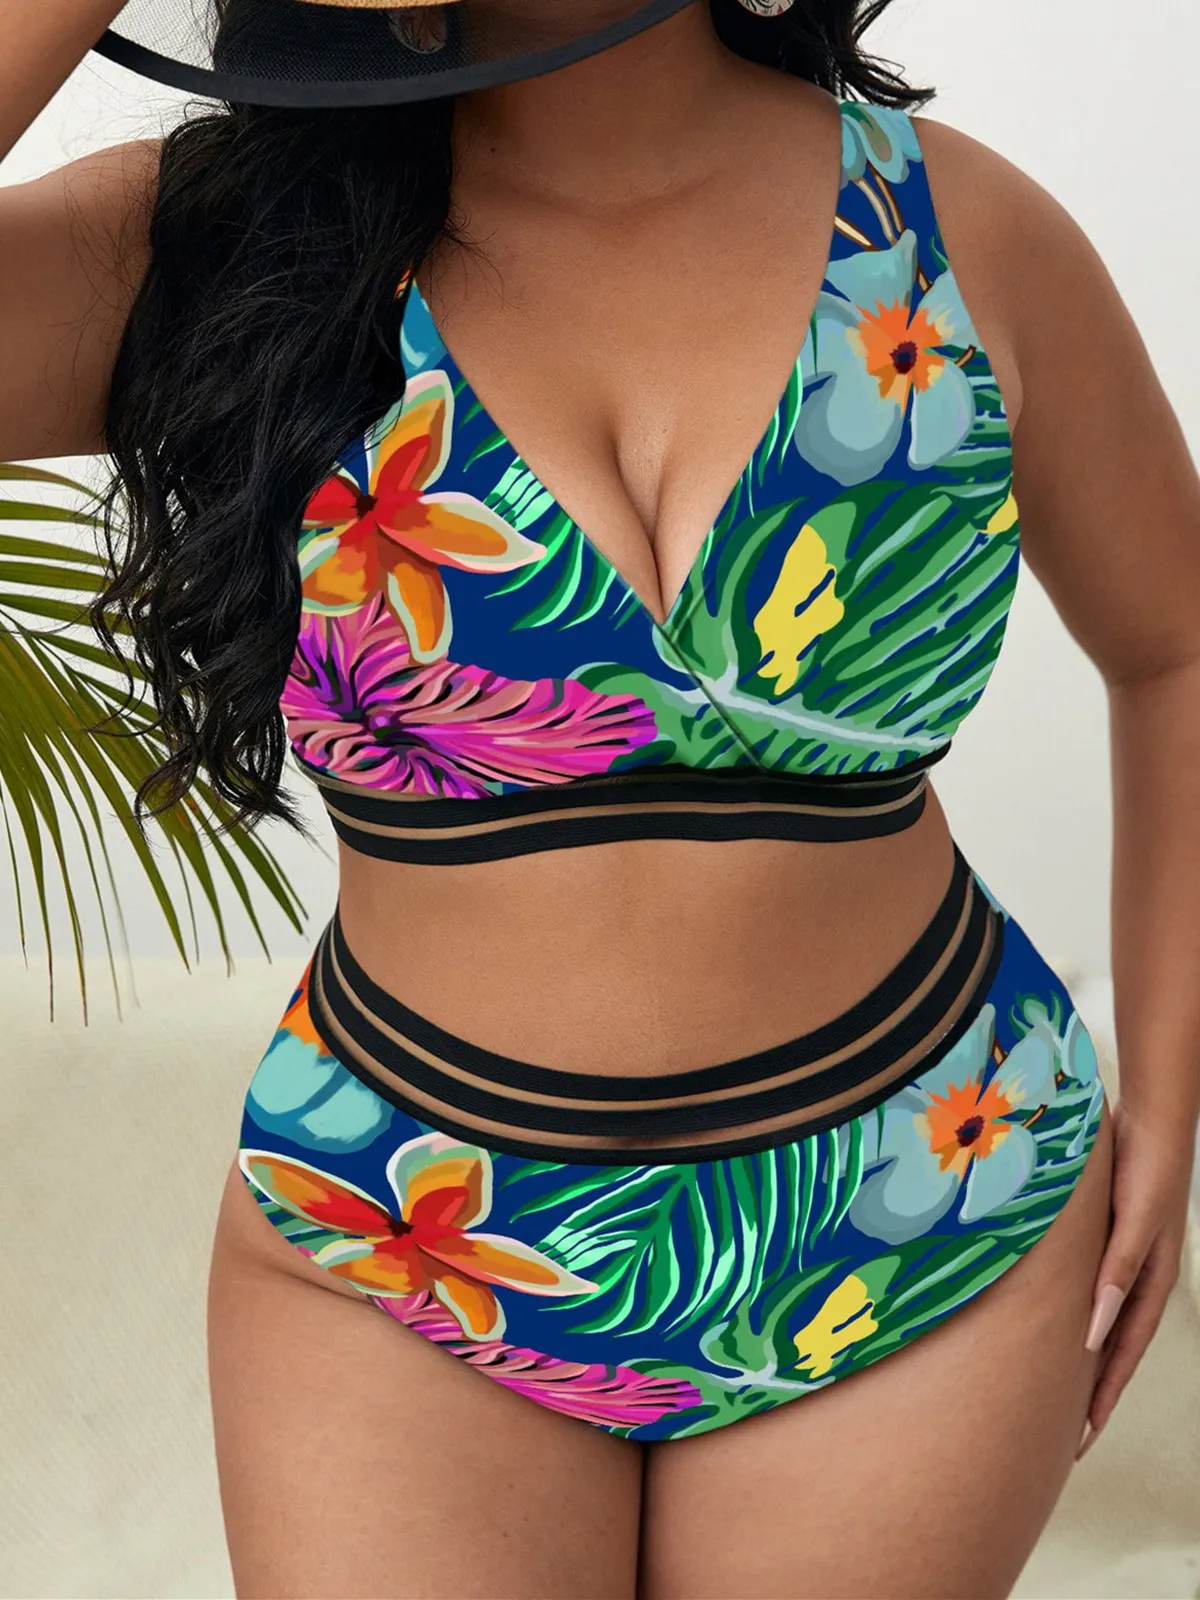 0xL - 4xl Neu gedruckter Bikini Plus Größe großer Badebekleidung Frauen Bikini Set Badeanzug V3893